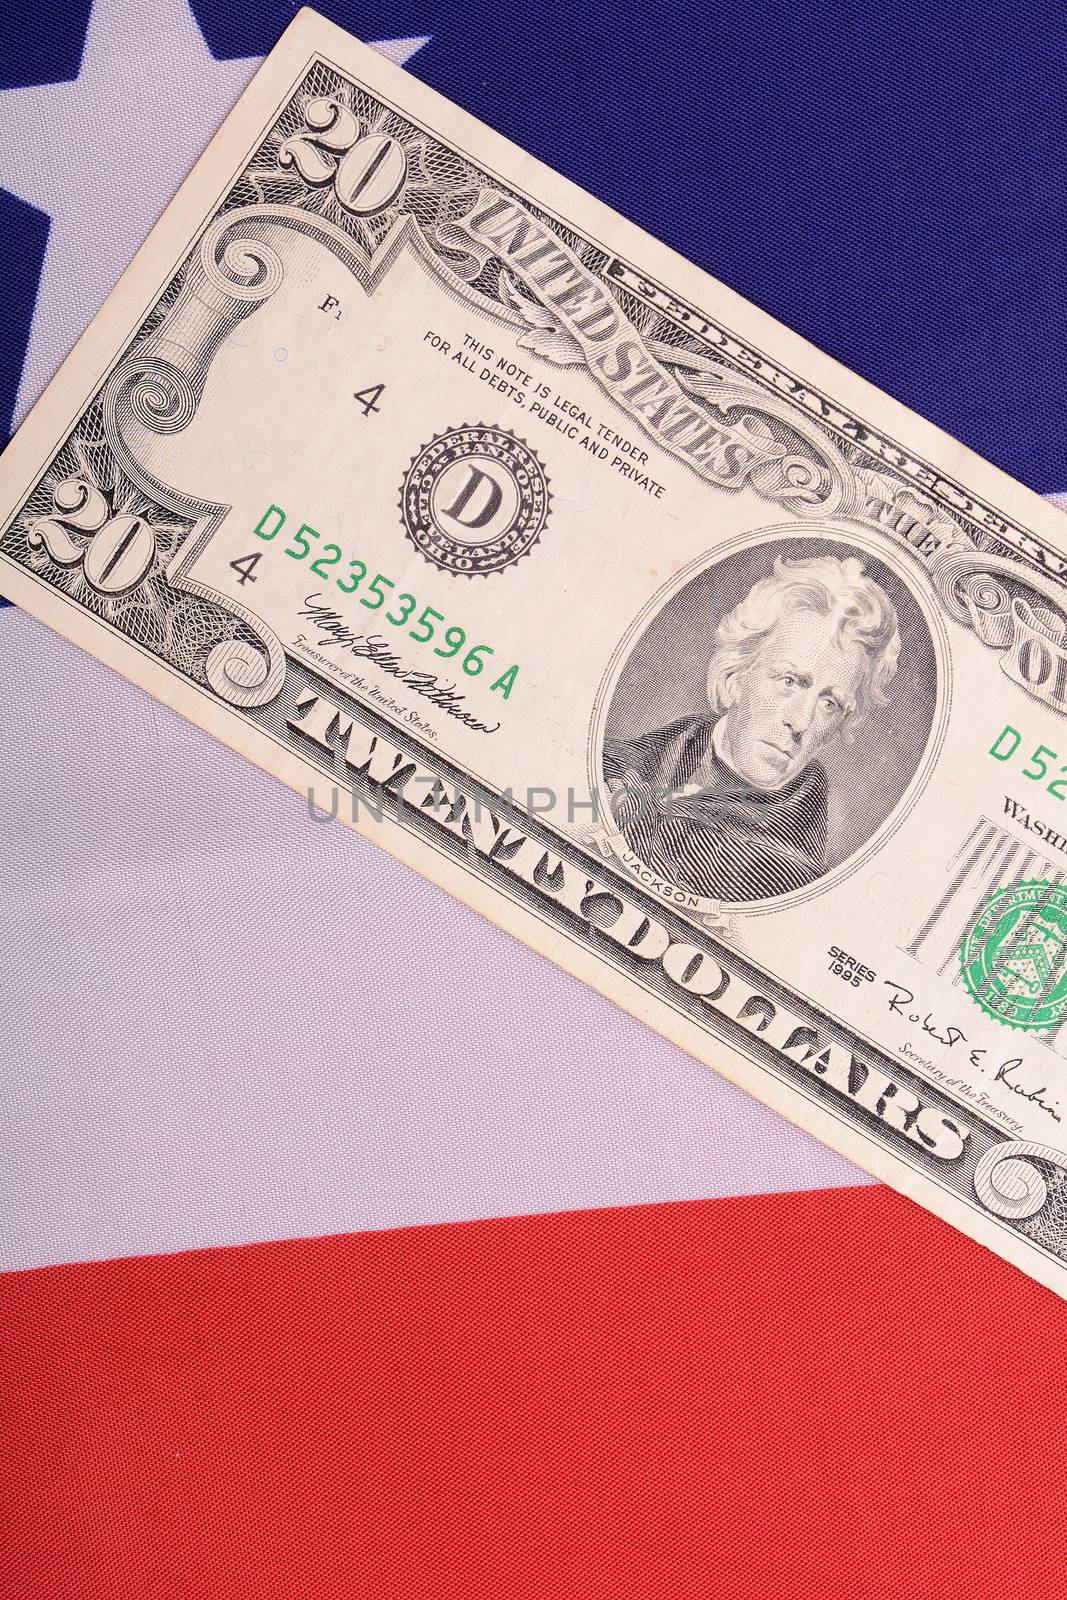 twenty dollar bill in front of the American flag